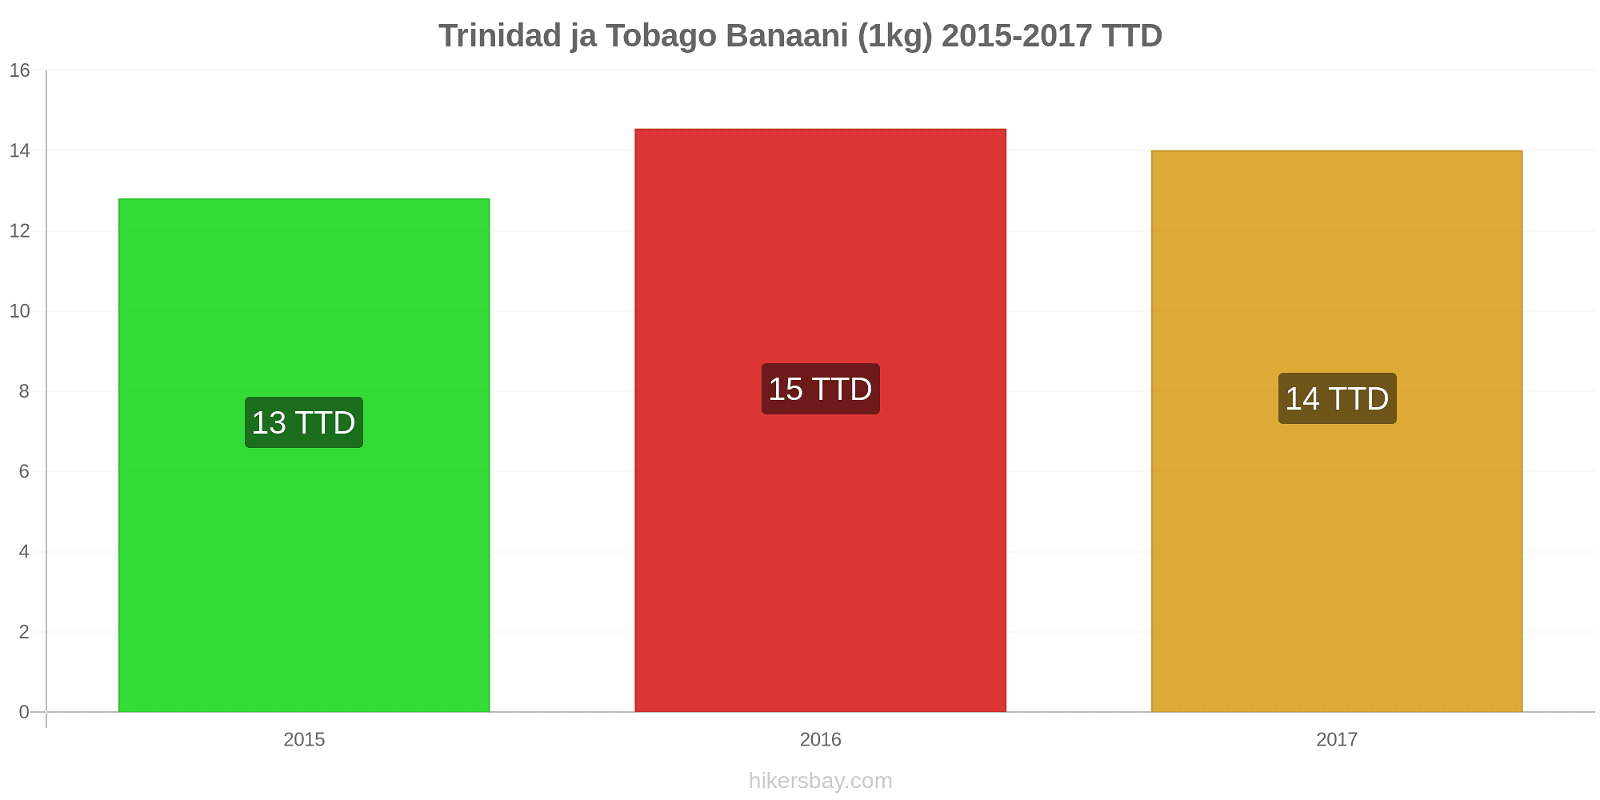 Trinidad ja Tobago hintojen muutokset Banaani (1kg) hikersbay.com